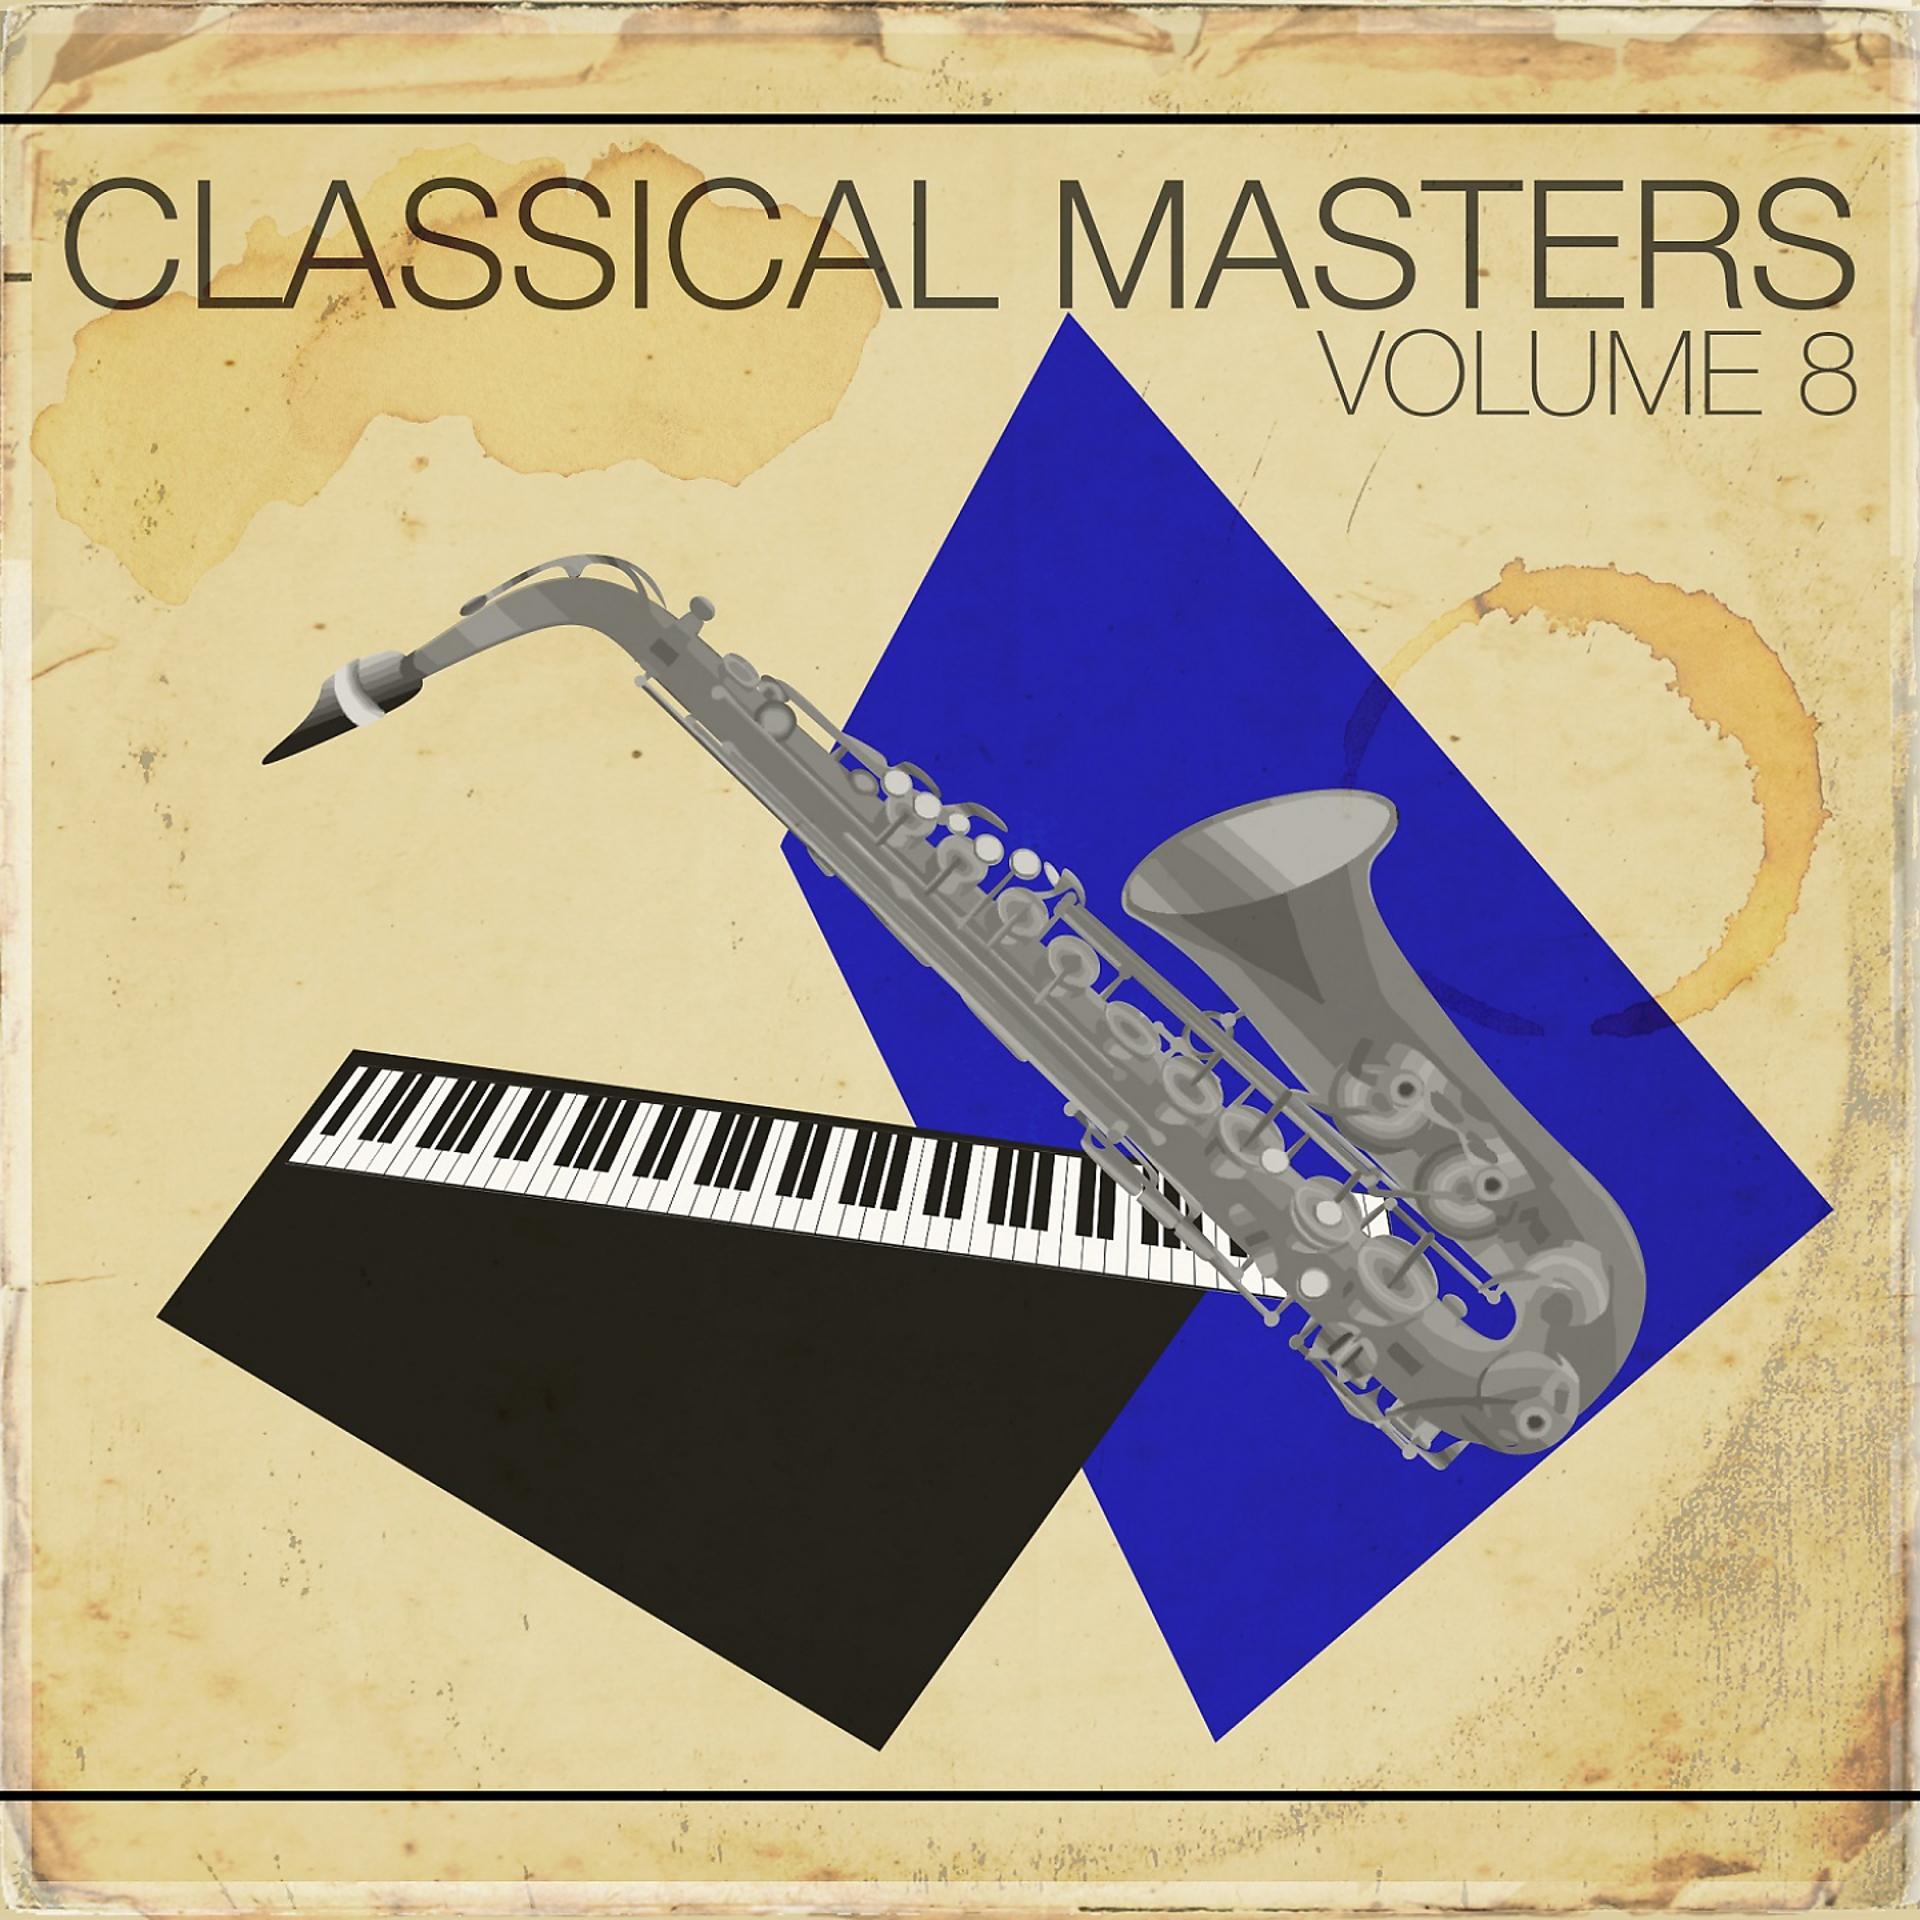 Classic master. The Classical album. A.S. & F.A. Orchestra Serenade.